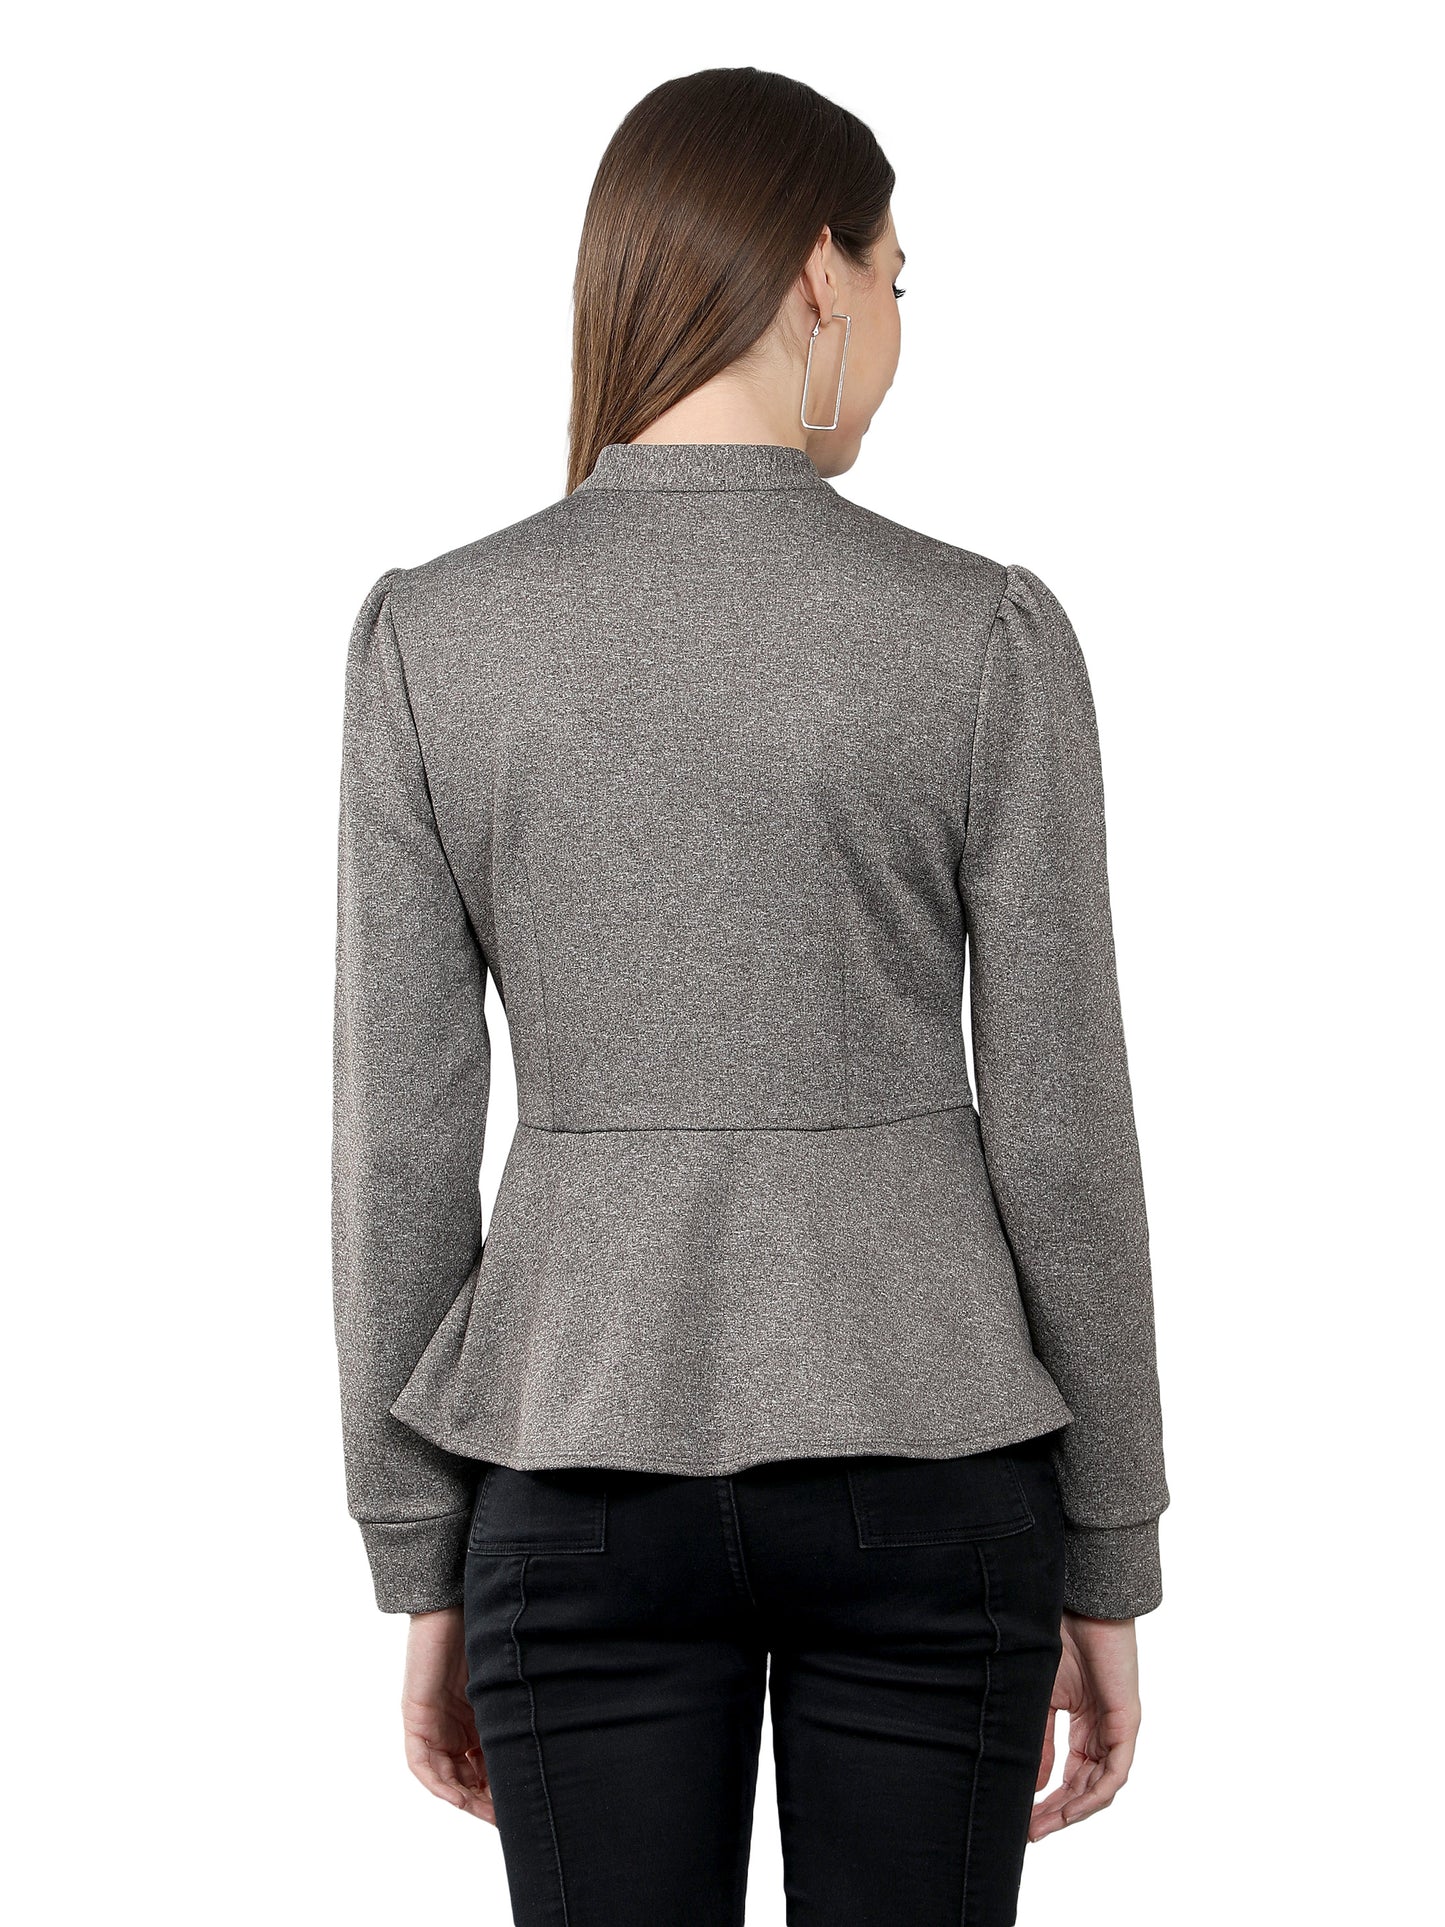 NUEVOSDAMAS Women Solid Peplum Jacket - Grey